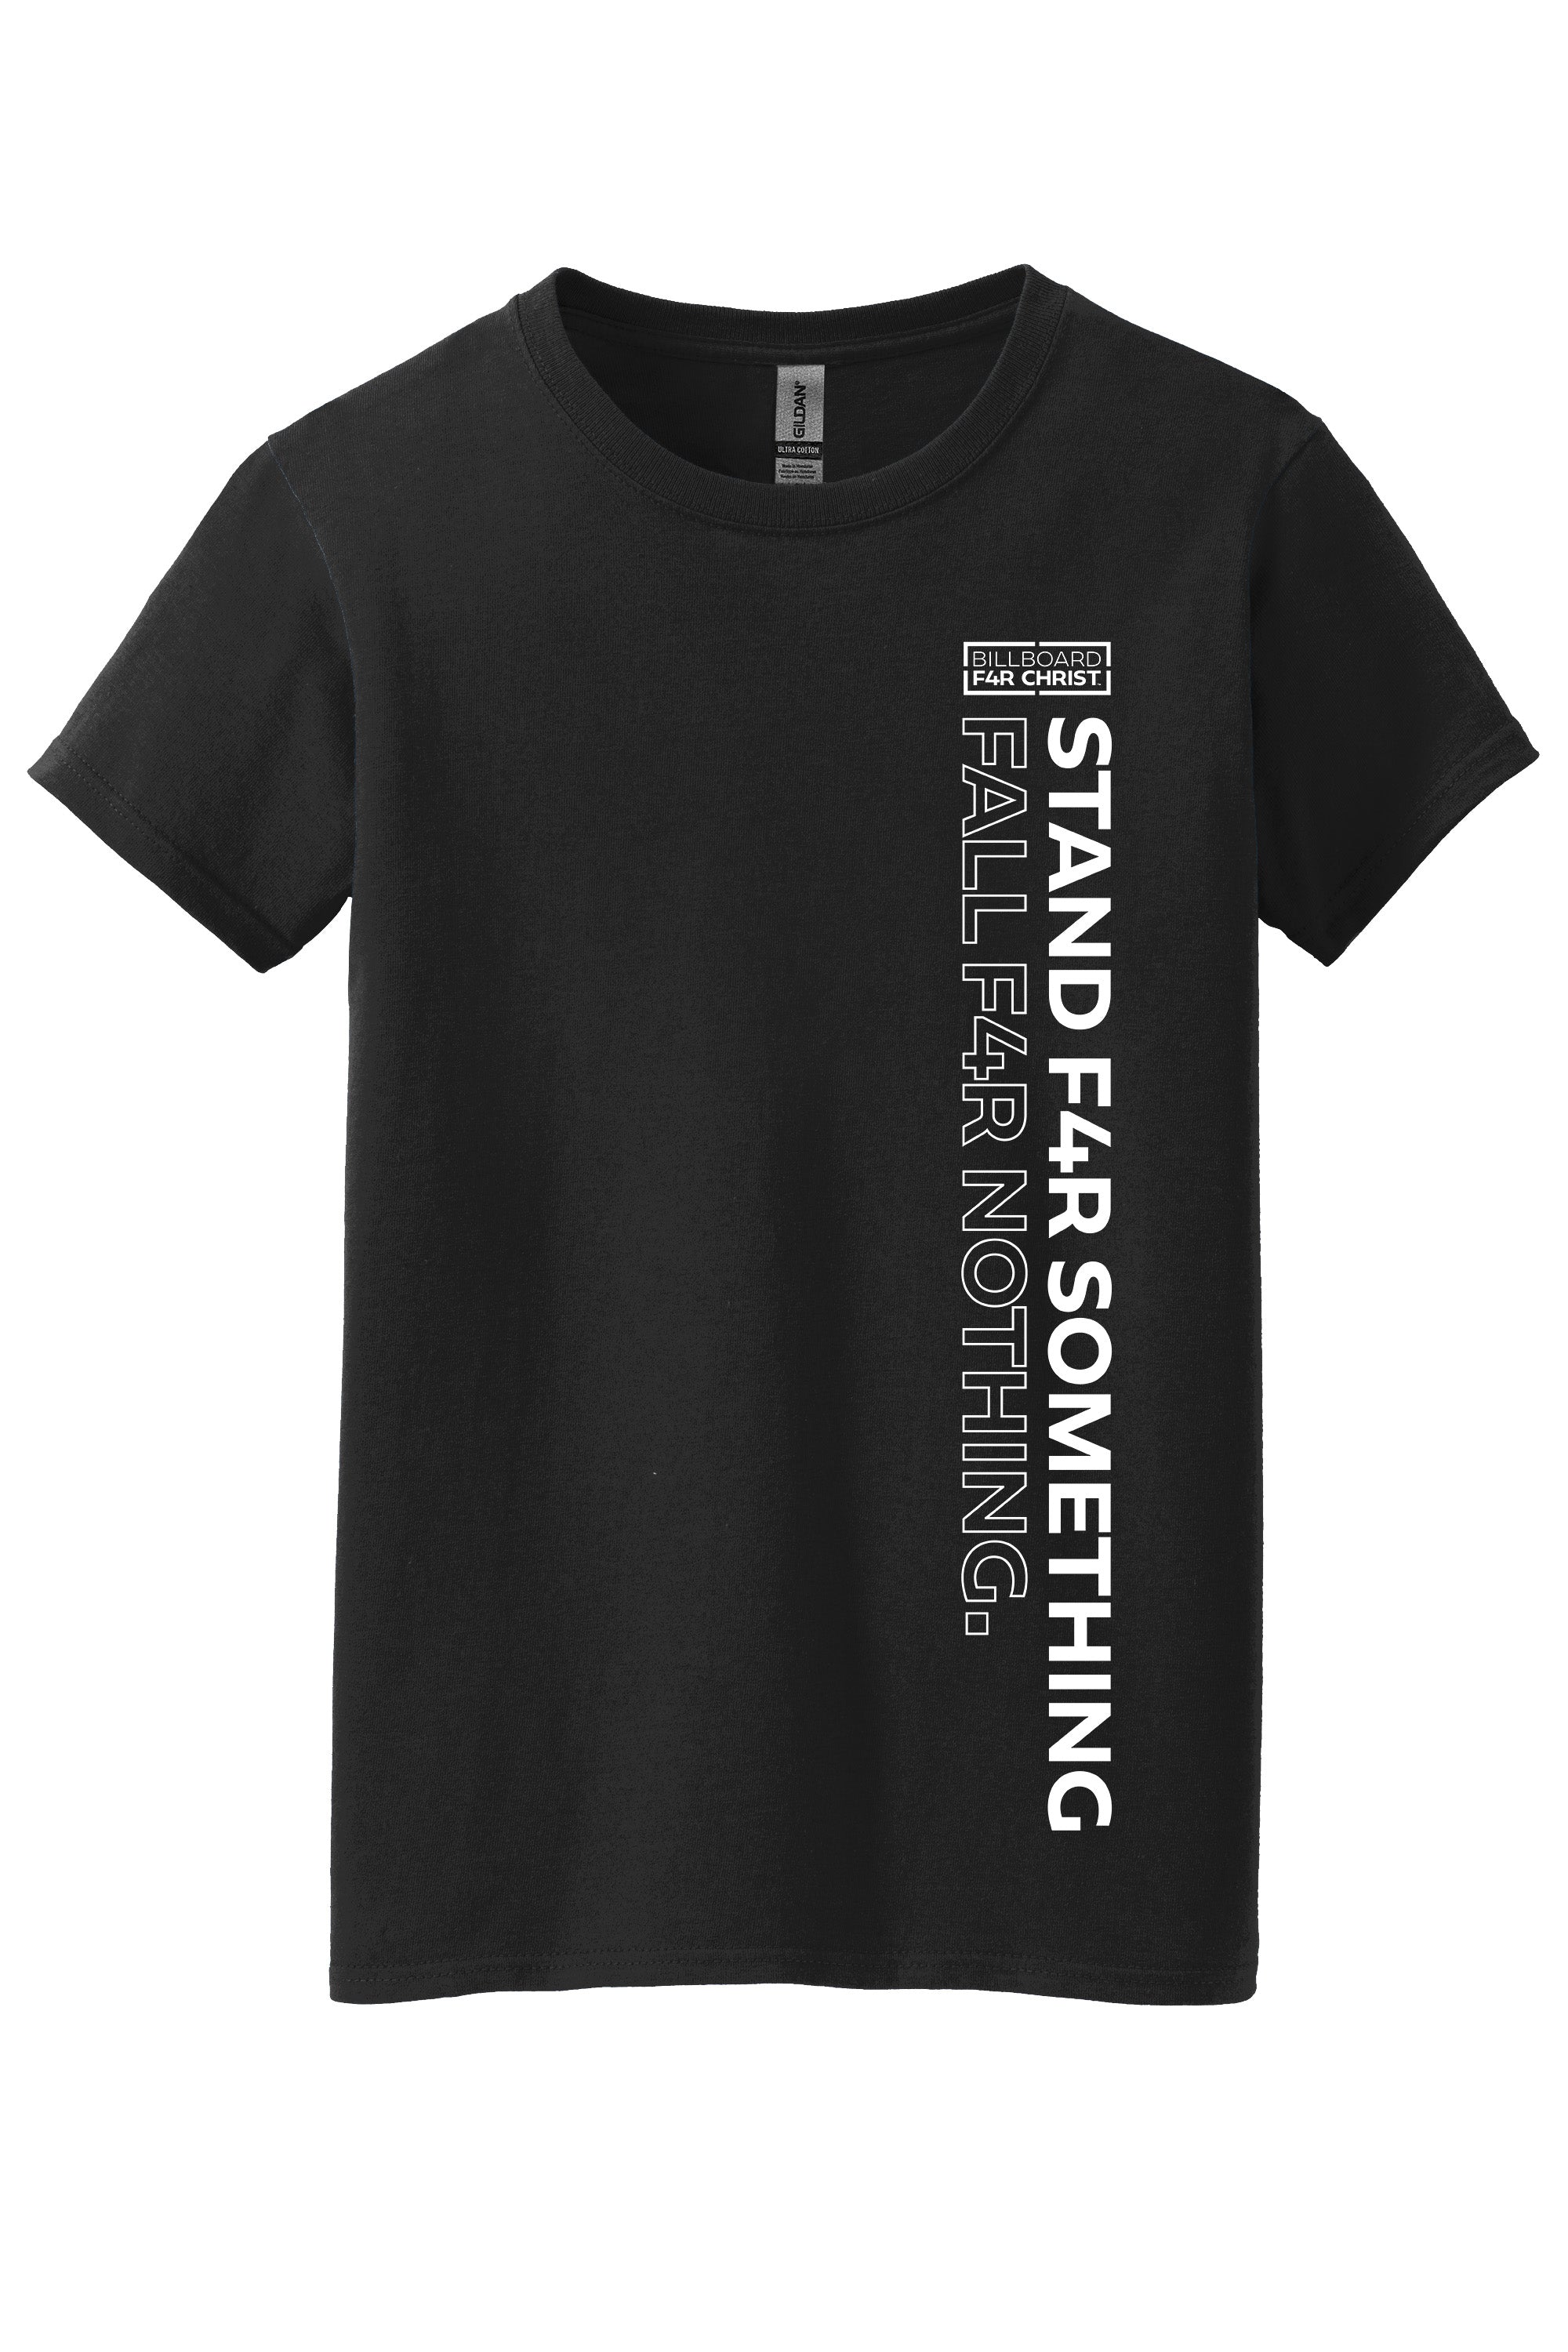 Stand F4R Something Women's T-Shirt